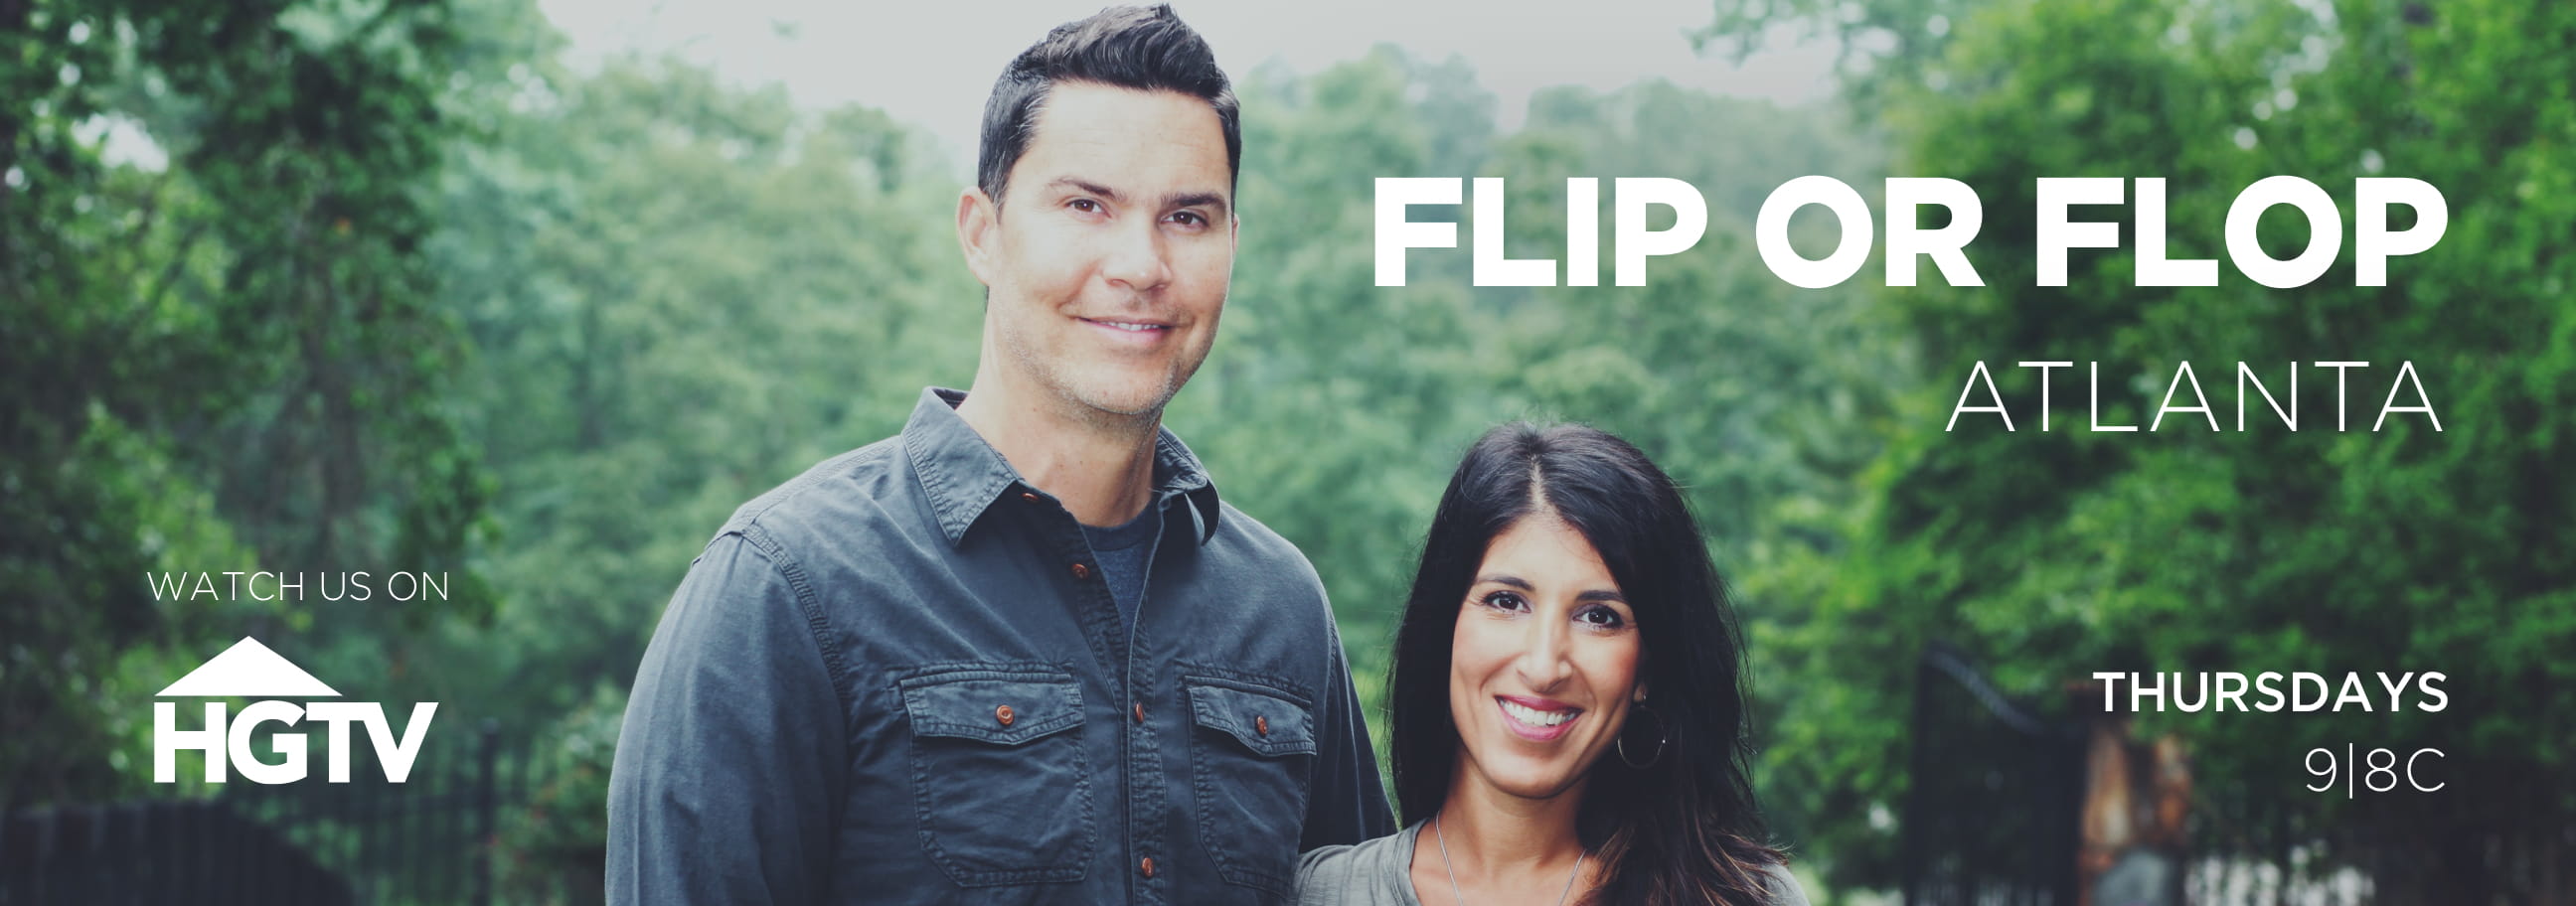 HGTV — Flip or Flop Atlanta with Ken and Anita Corsini